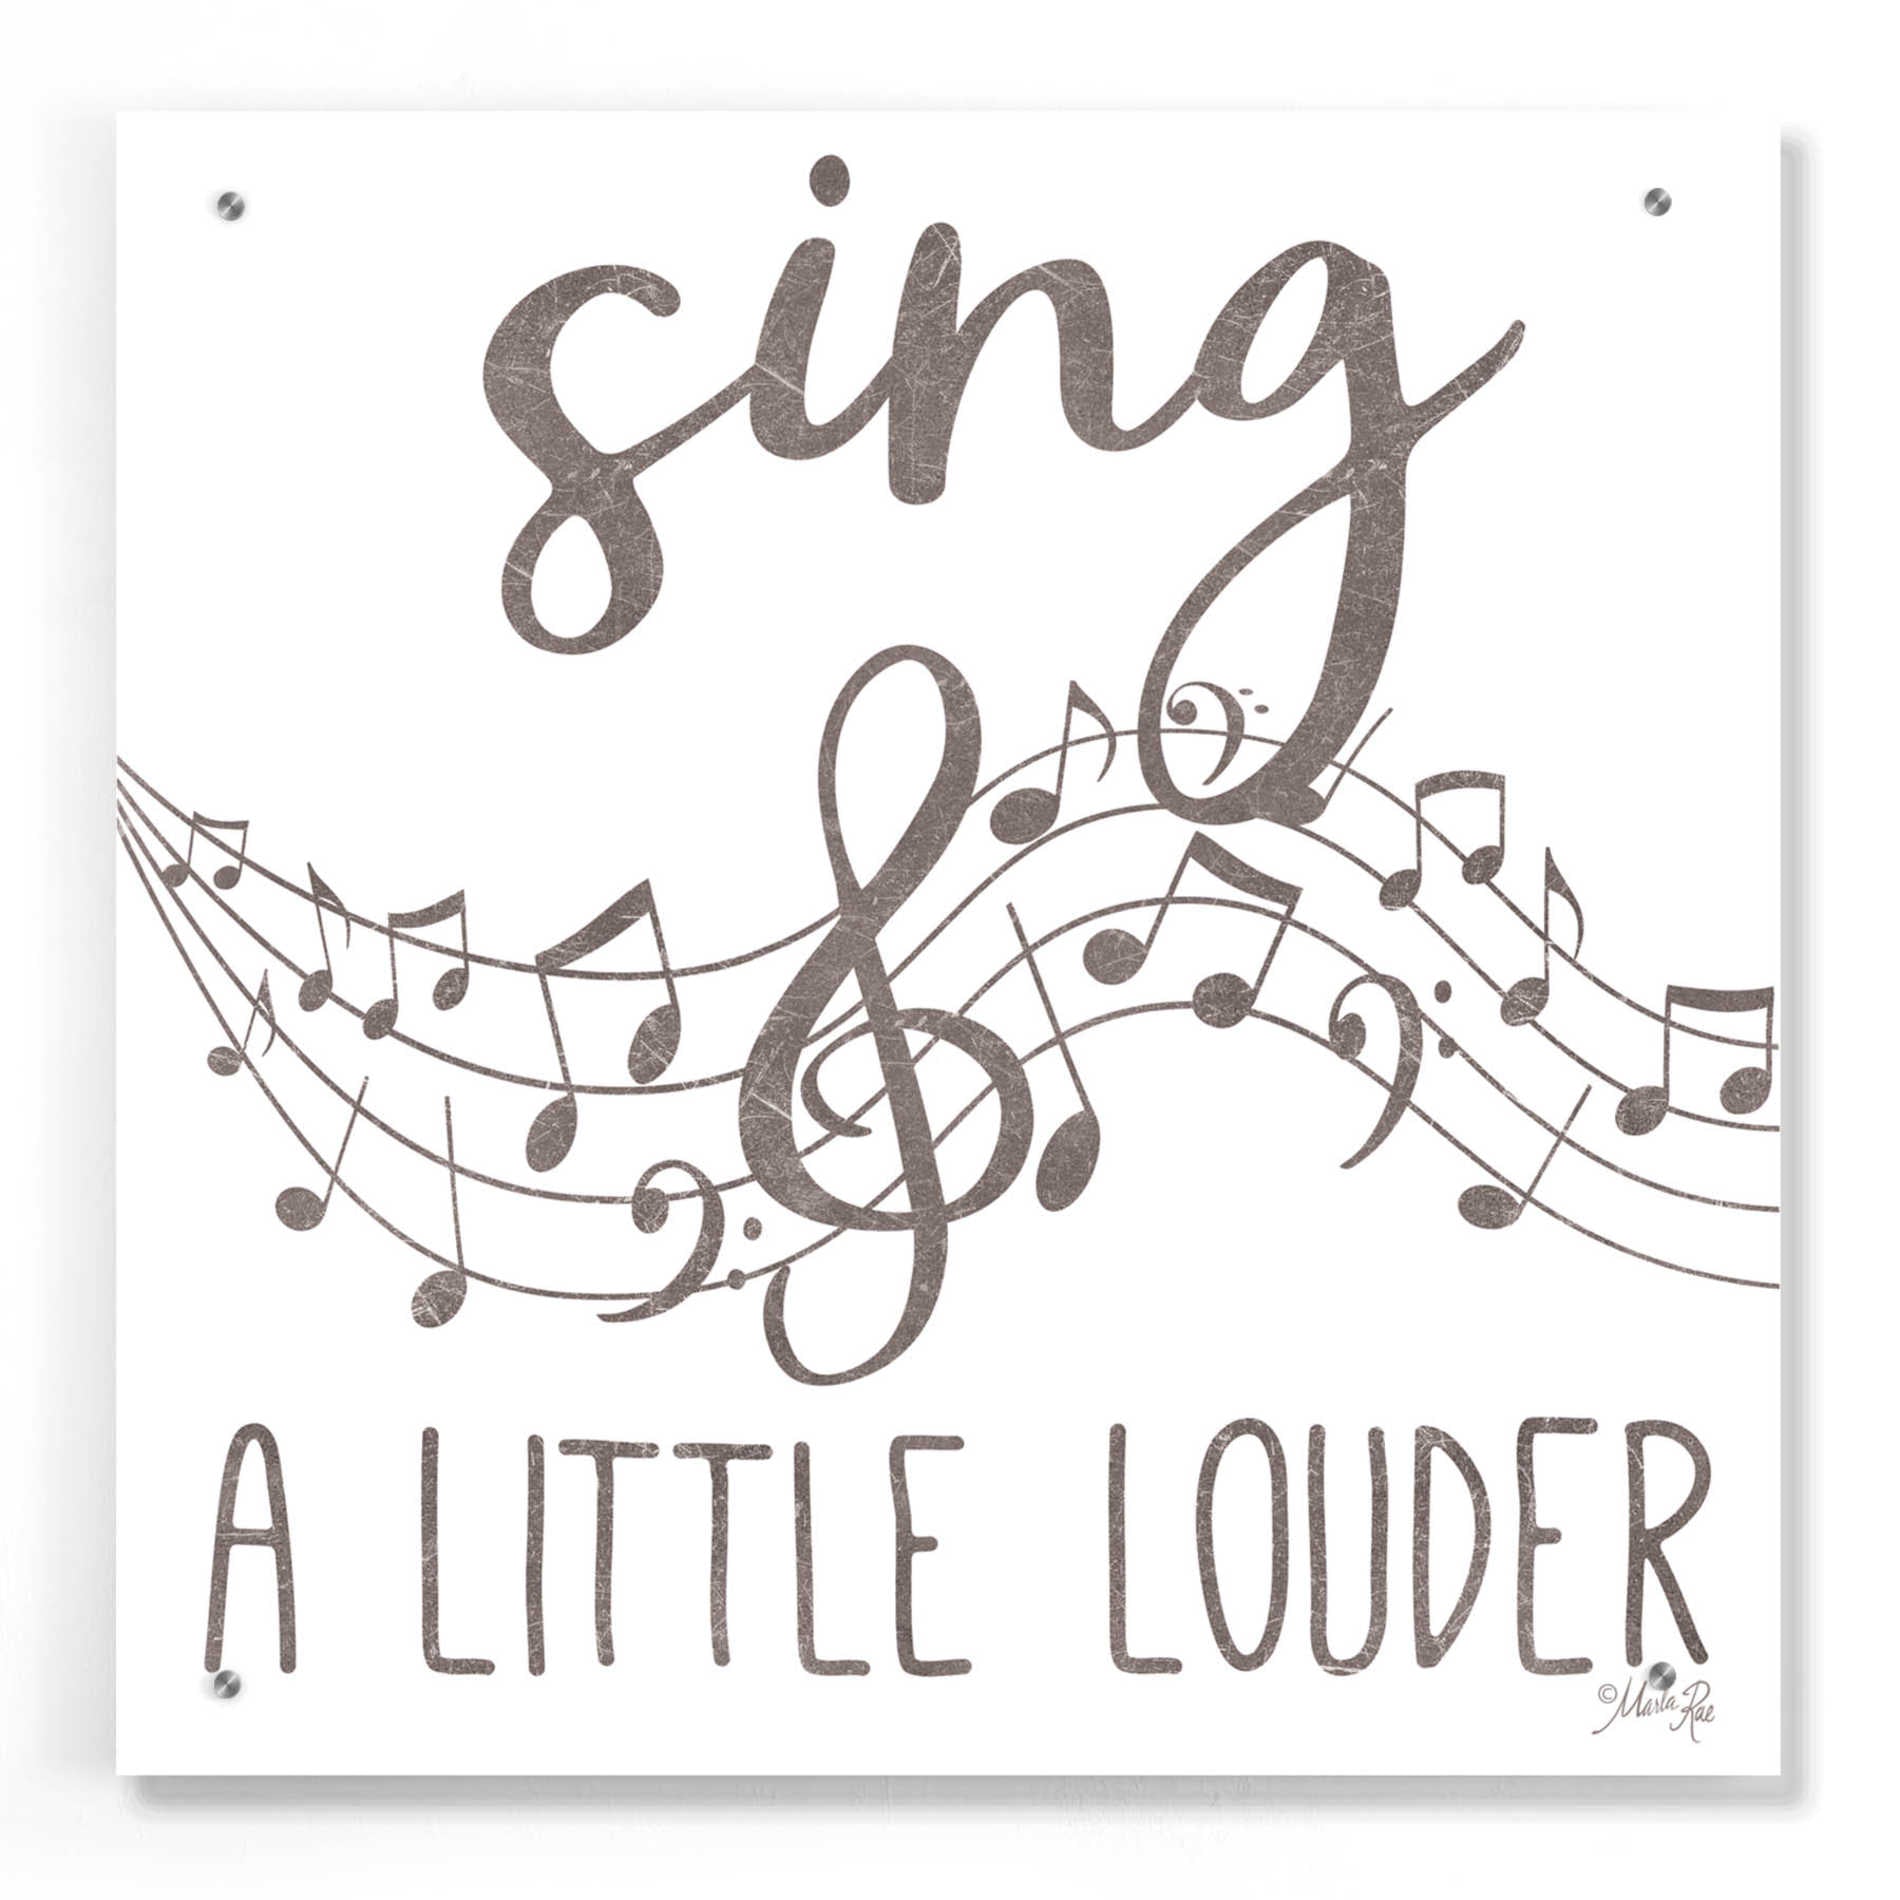 Epic Art 'Sing & A Little Louder' by Marla Rae, Acrylic Glass Wall Art,24x24